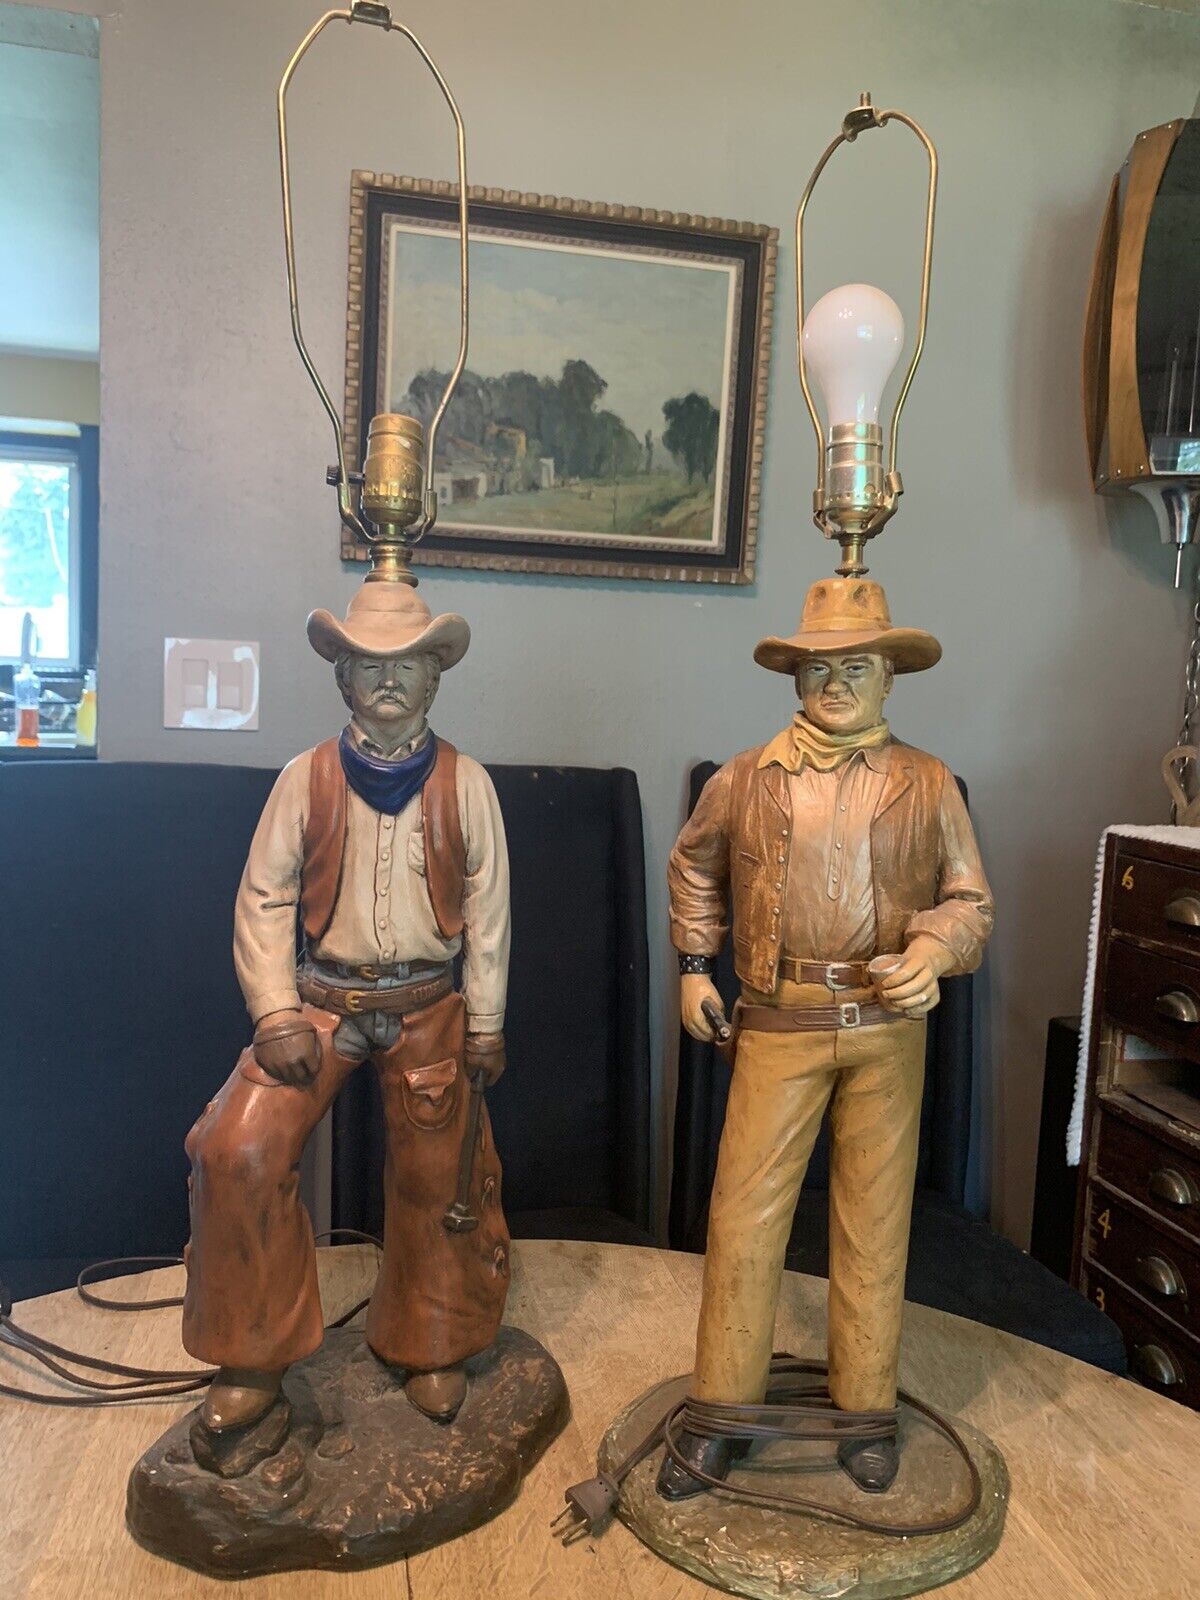 2 Vintage Florentine Art Studio John Wayne Cowboy Lamps